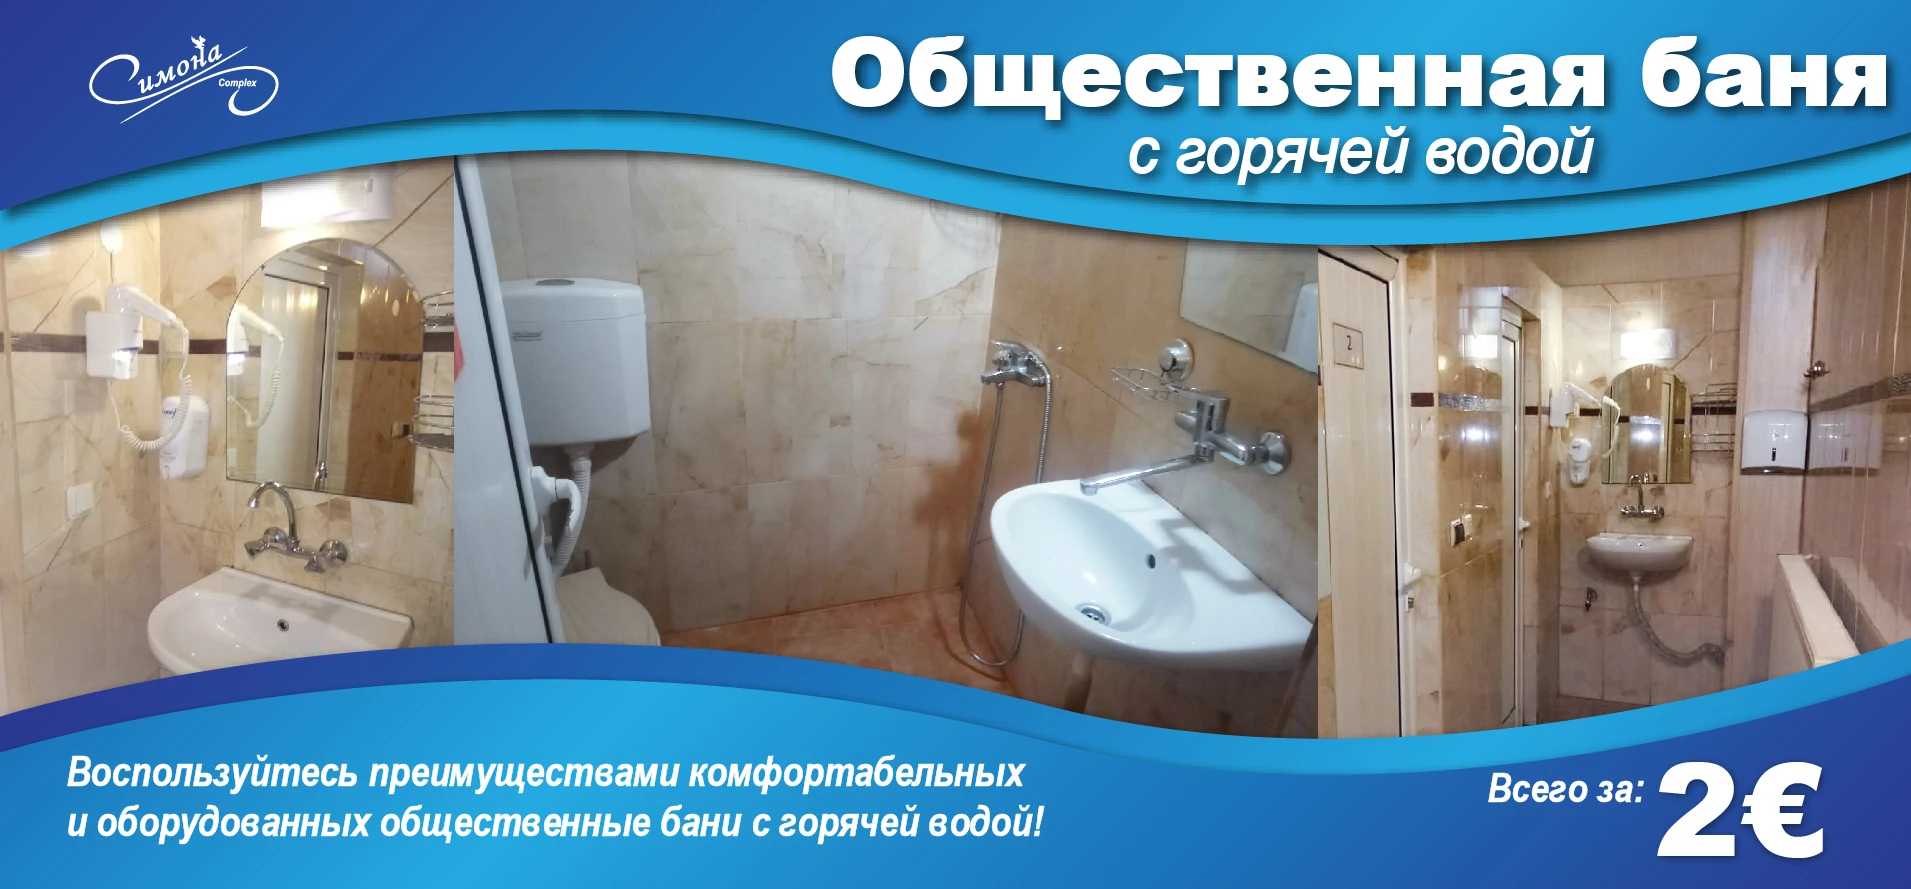 1271-обществена-баня-ру-карусел-17054923019023.jpg